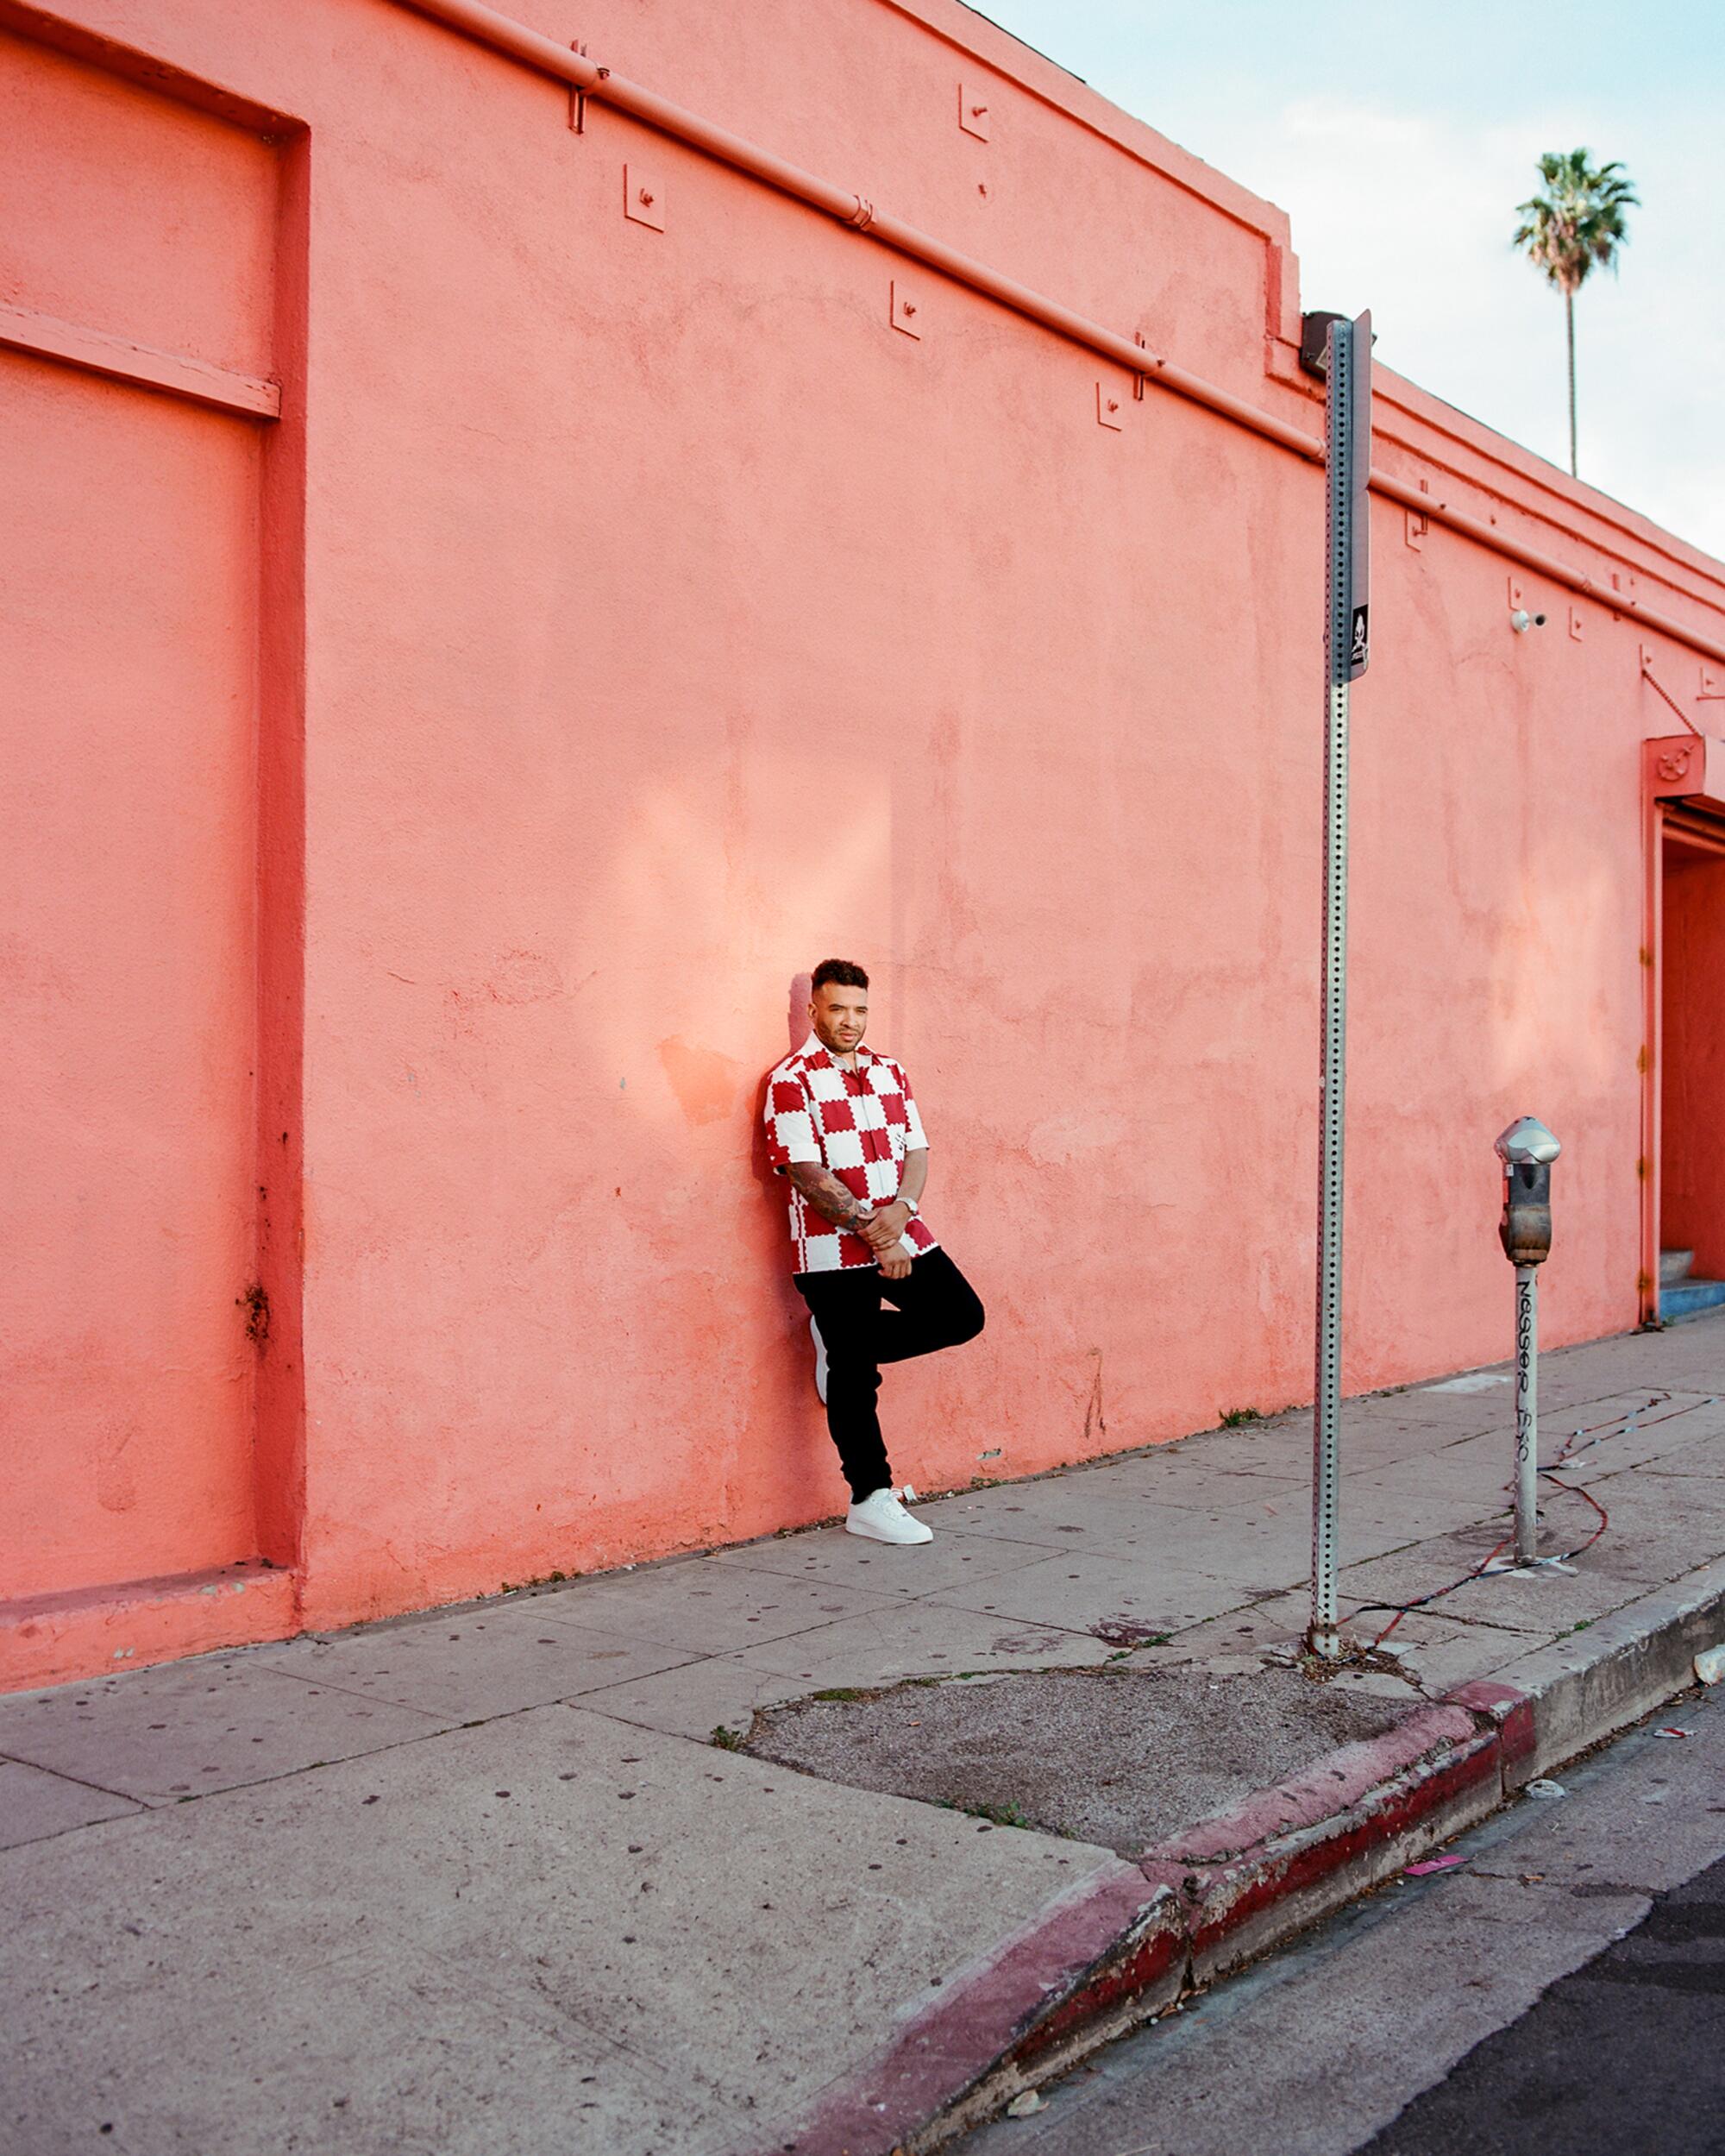 Jason Lee stands on the sidewalk in Los Angeles.